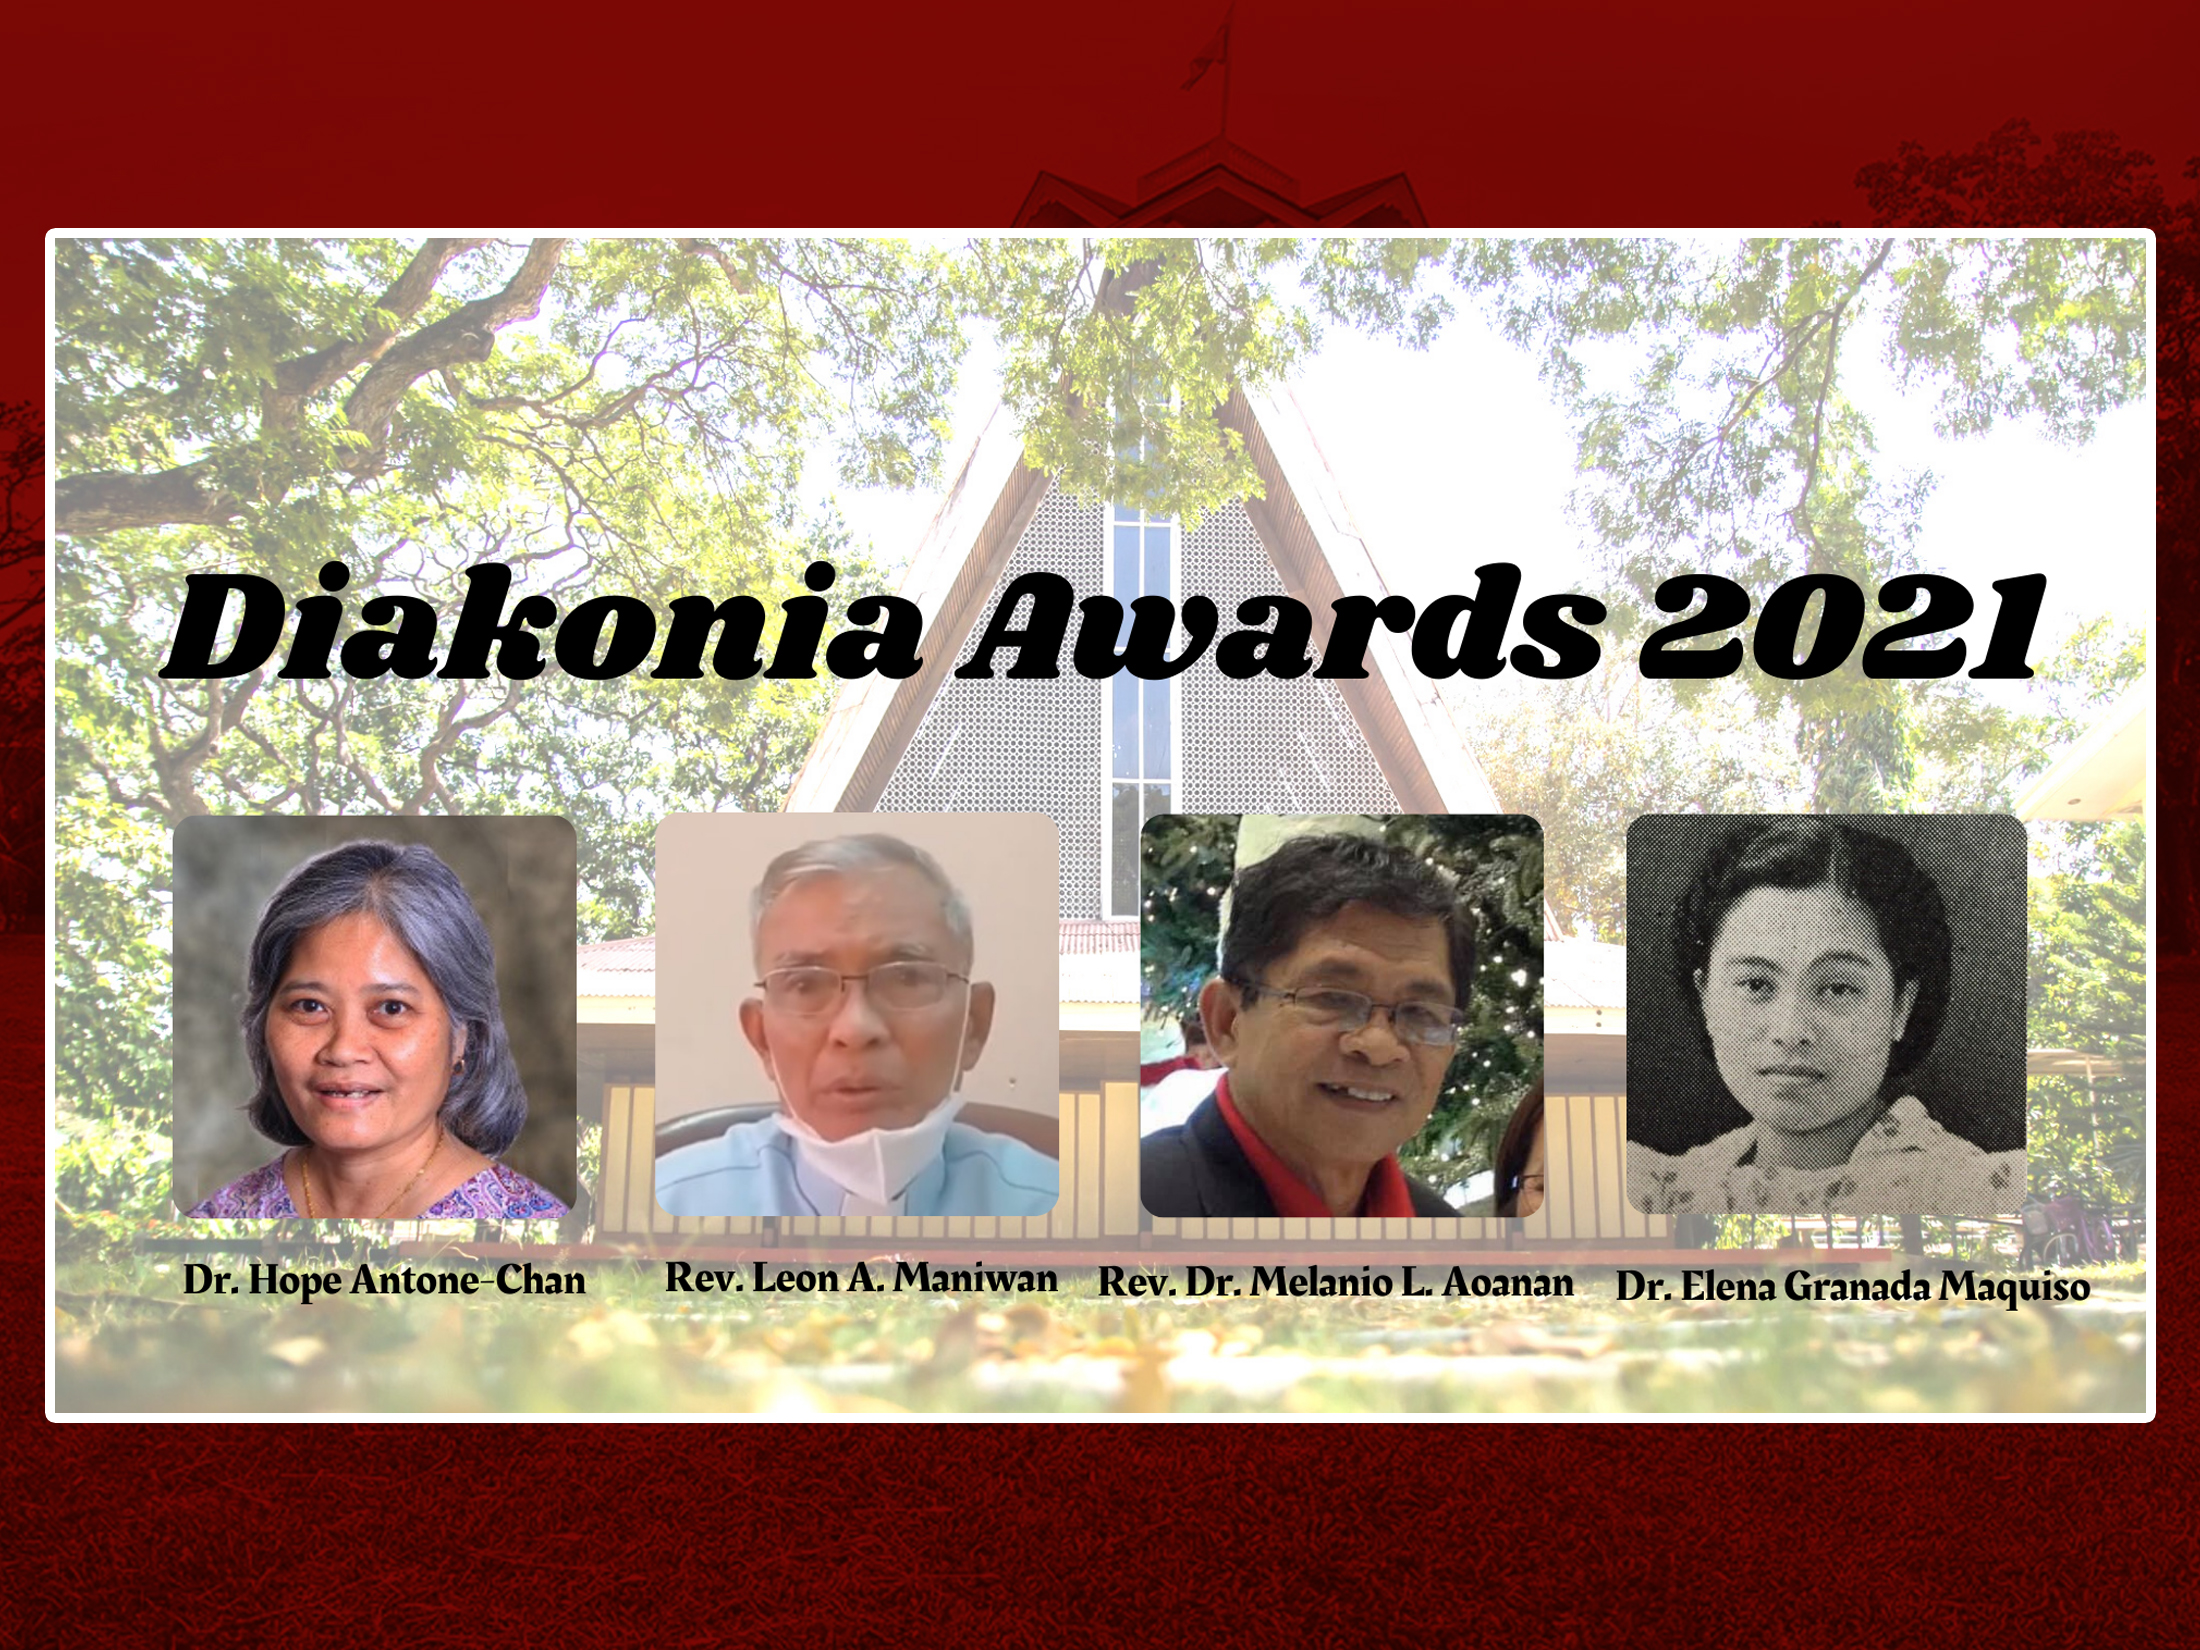 Affirming Varieties of Service through the Annual Diakonia Awards